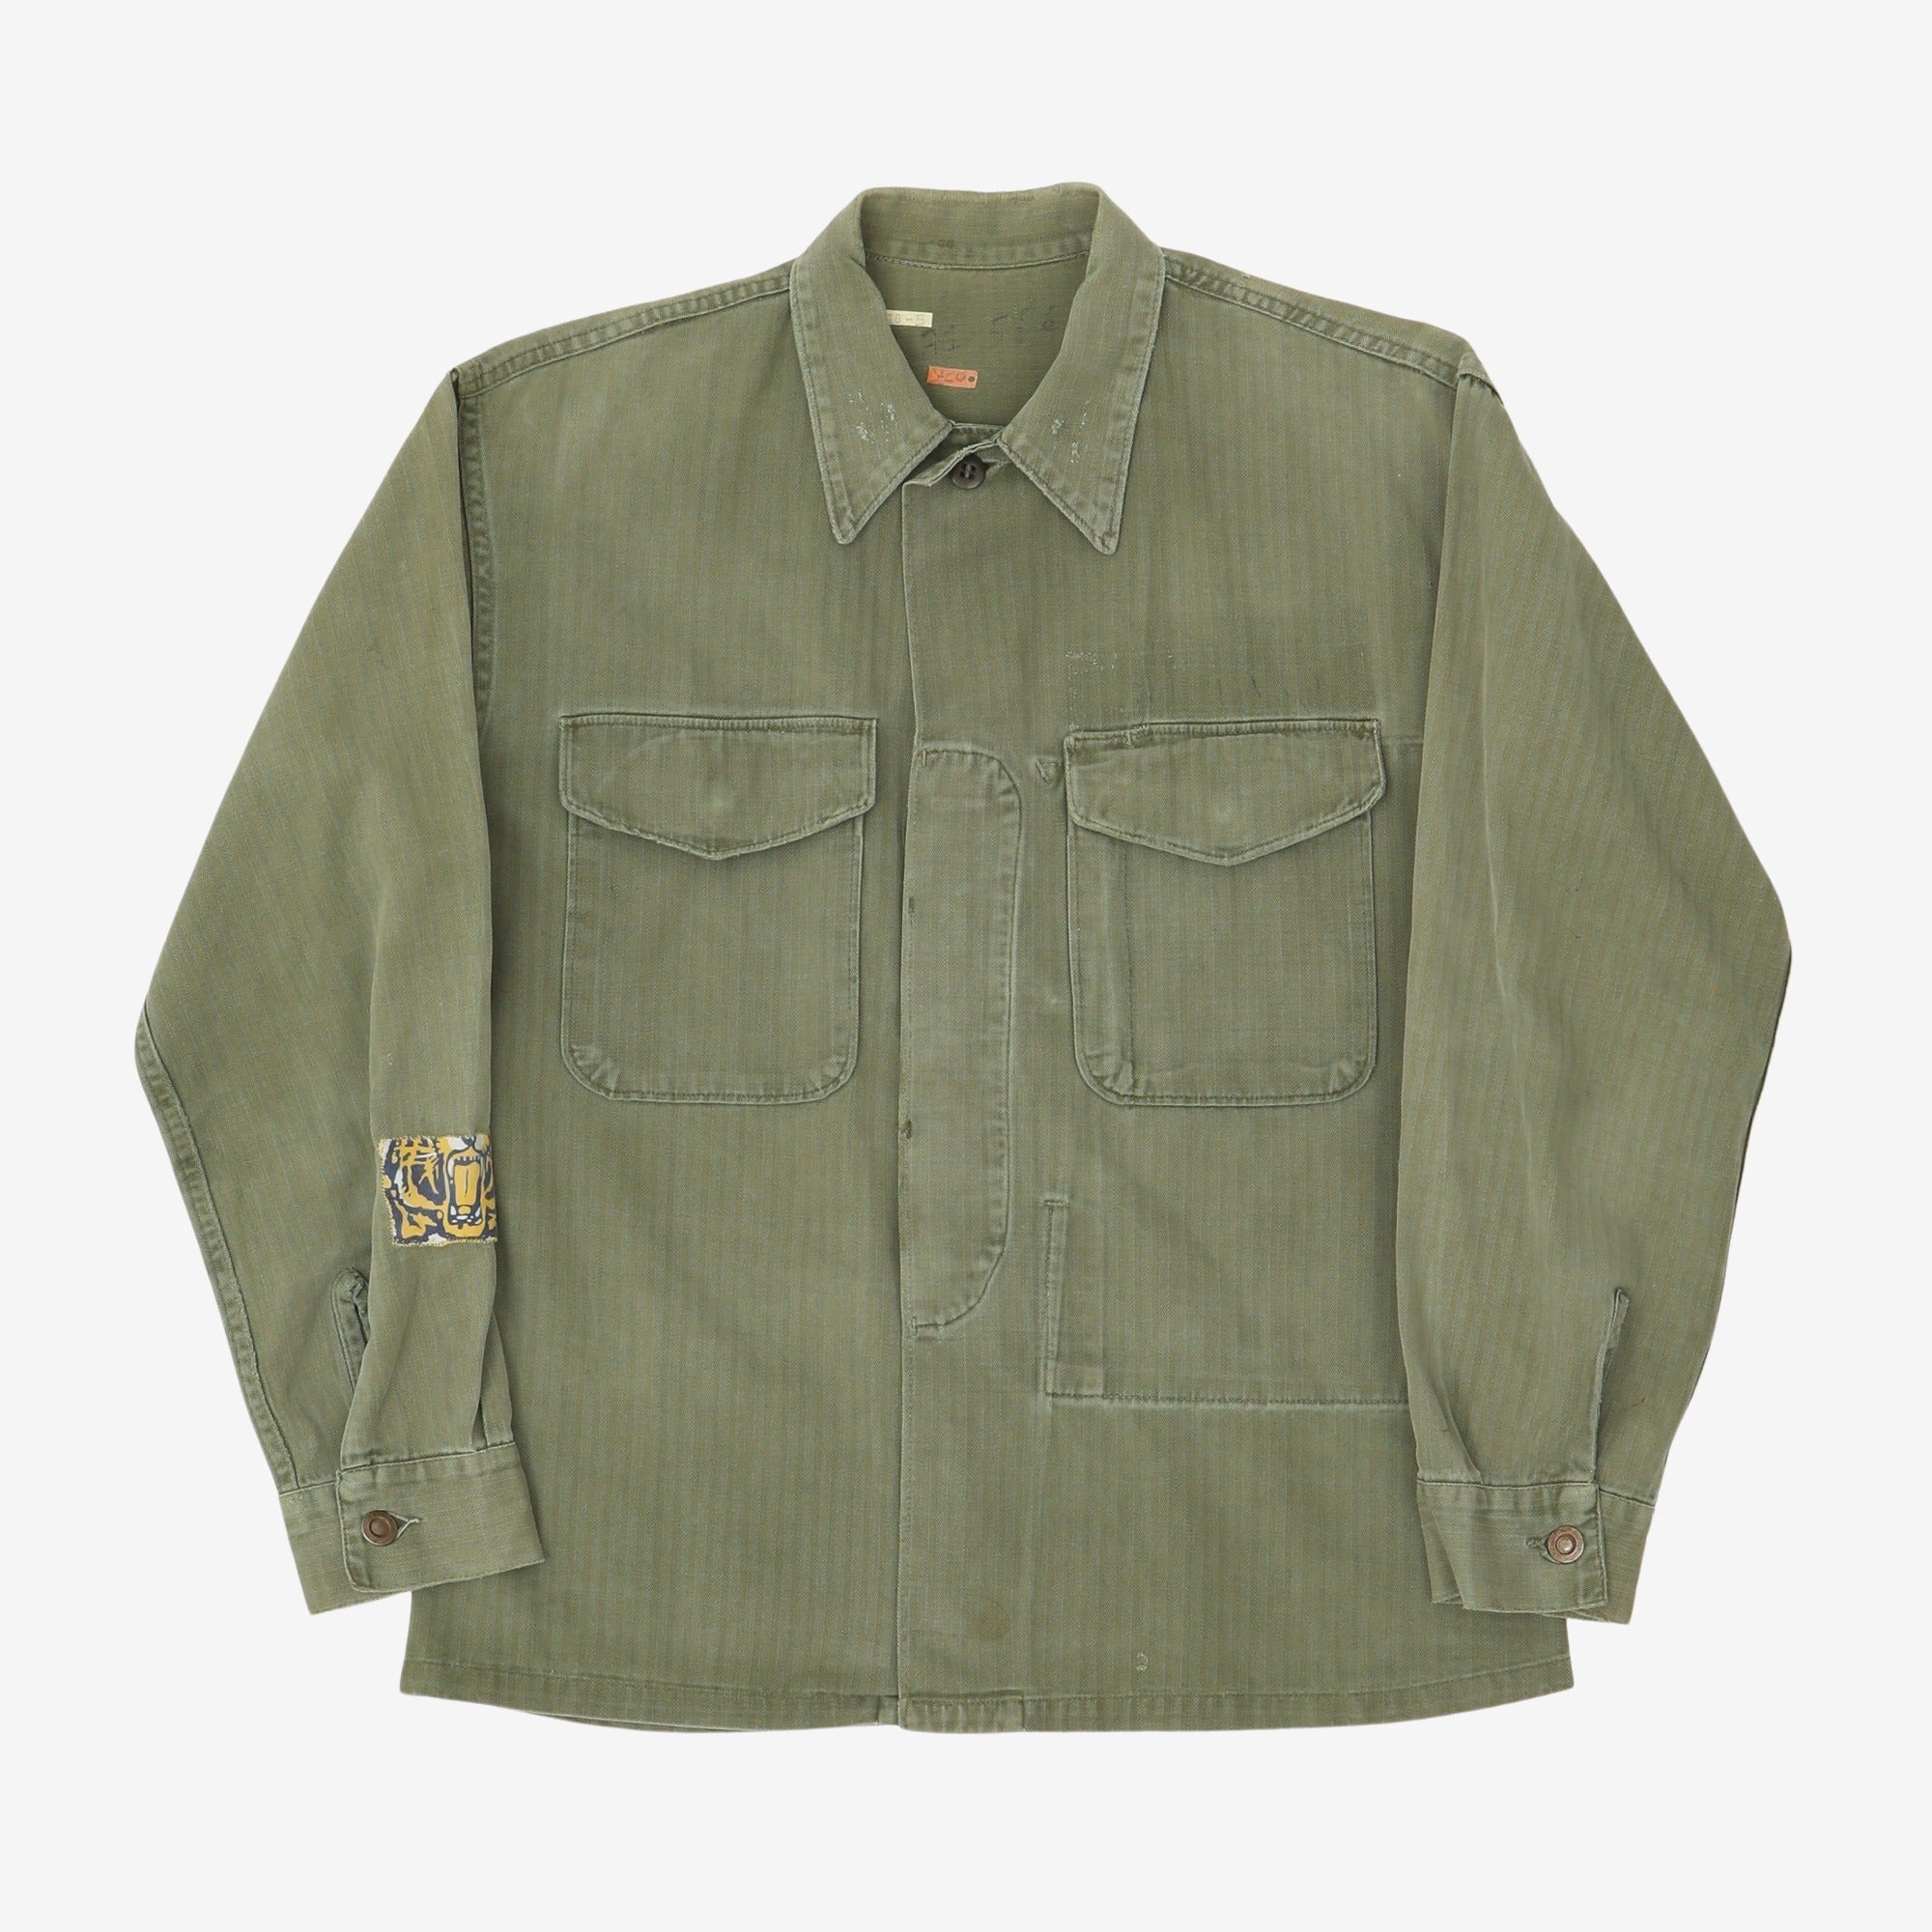 1953 US Marine Corps HBT P53 jacket